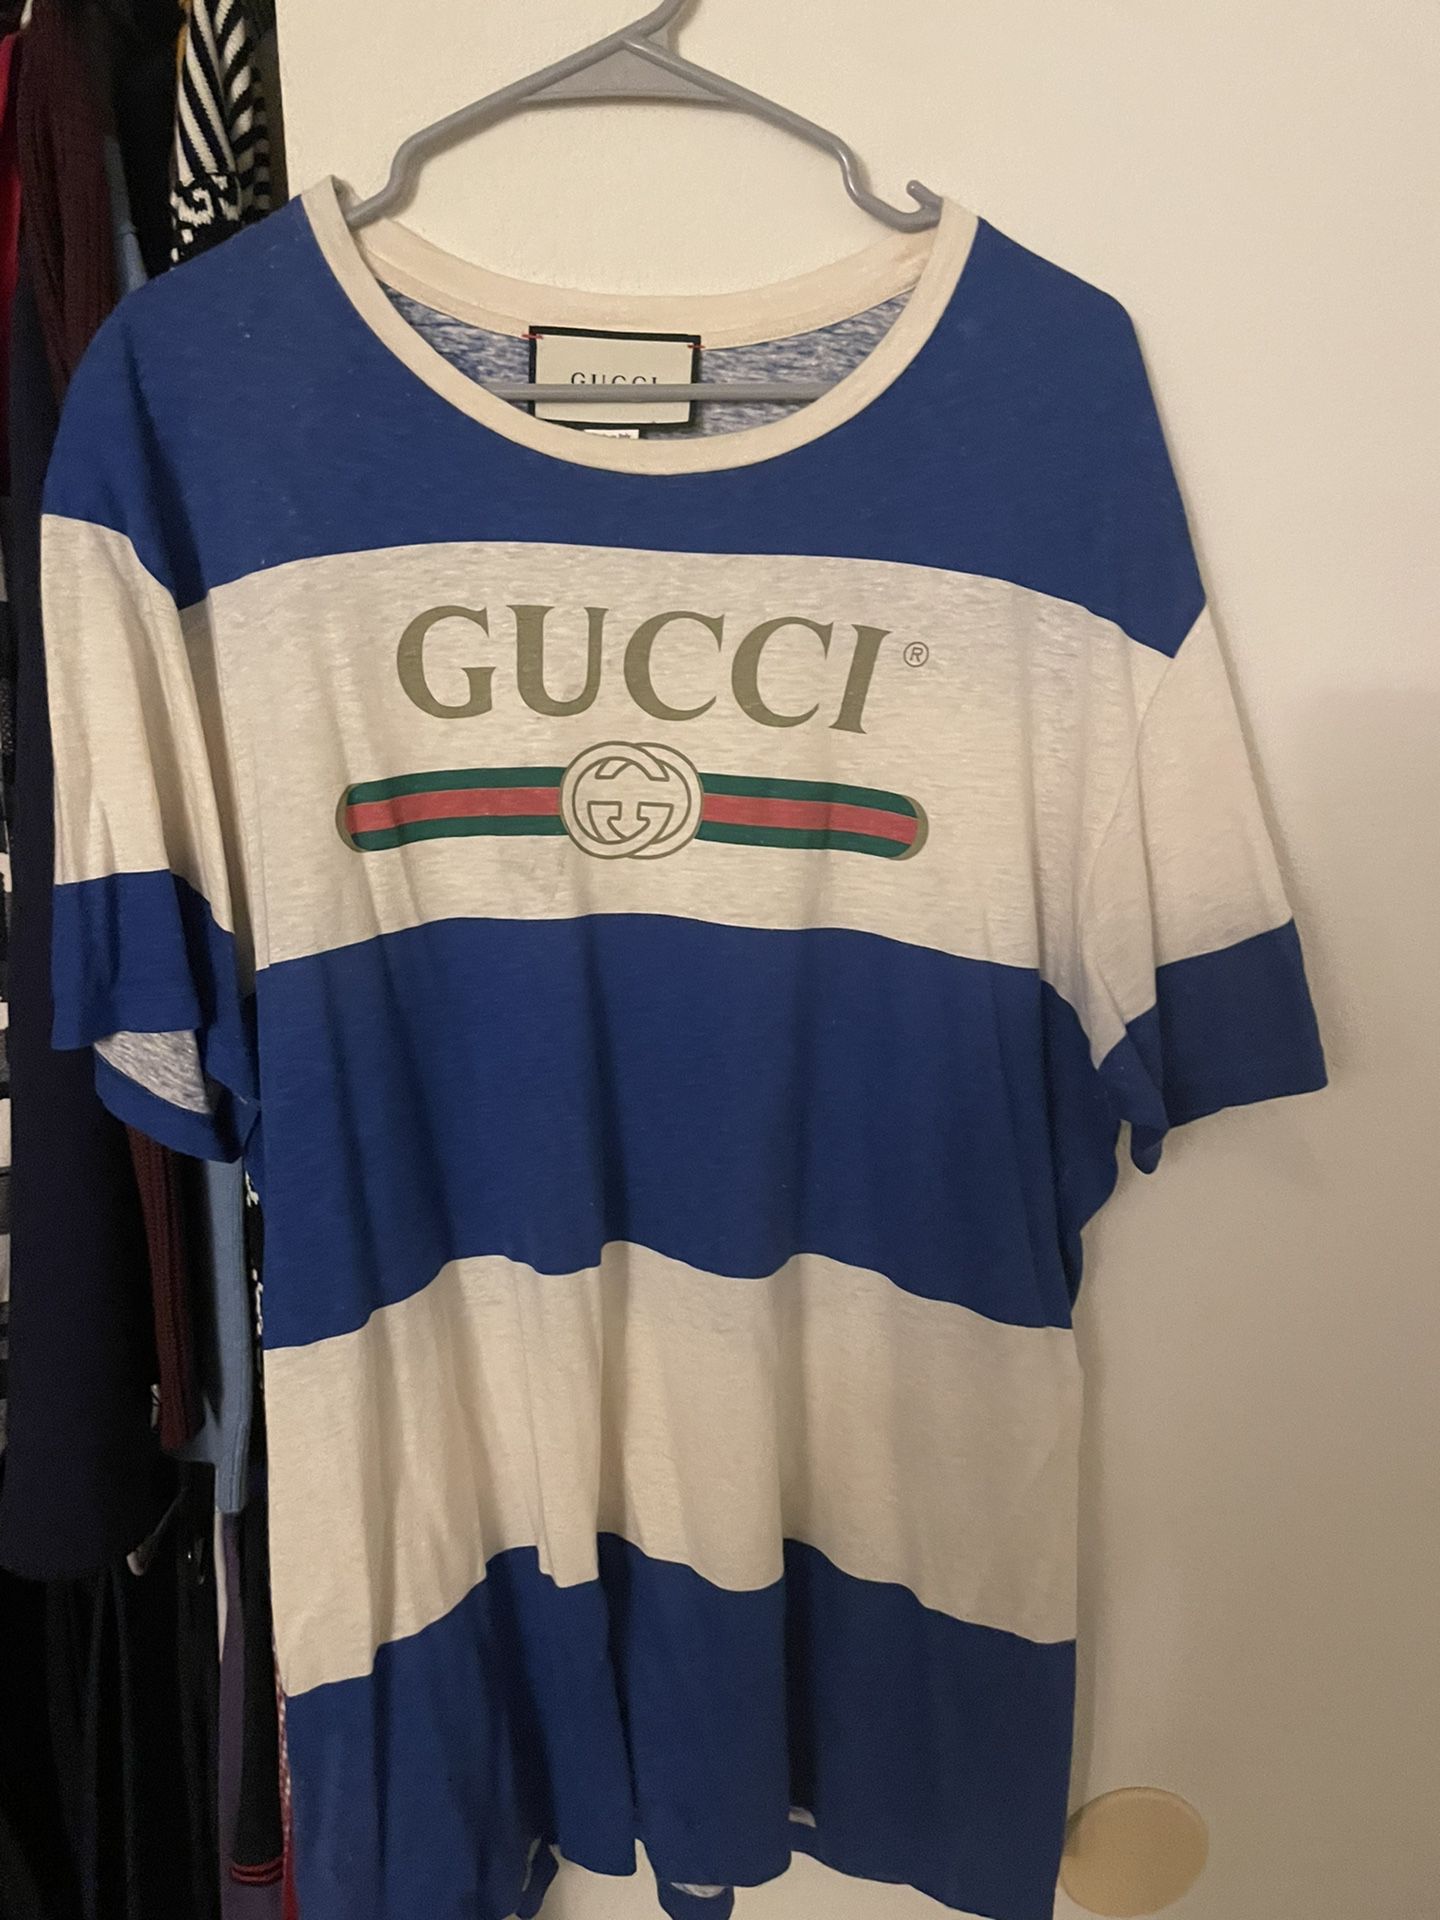 Gucci T-shirt Size Large